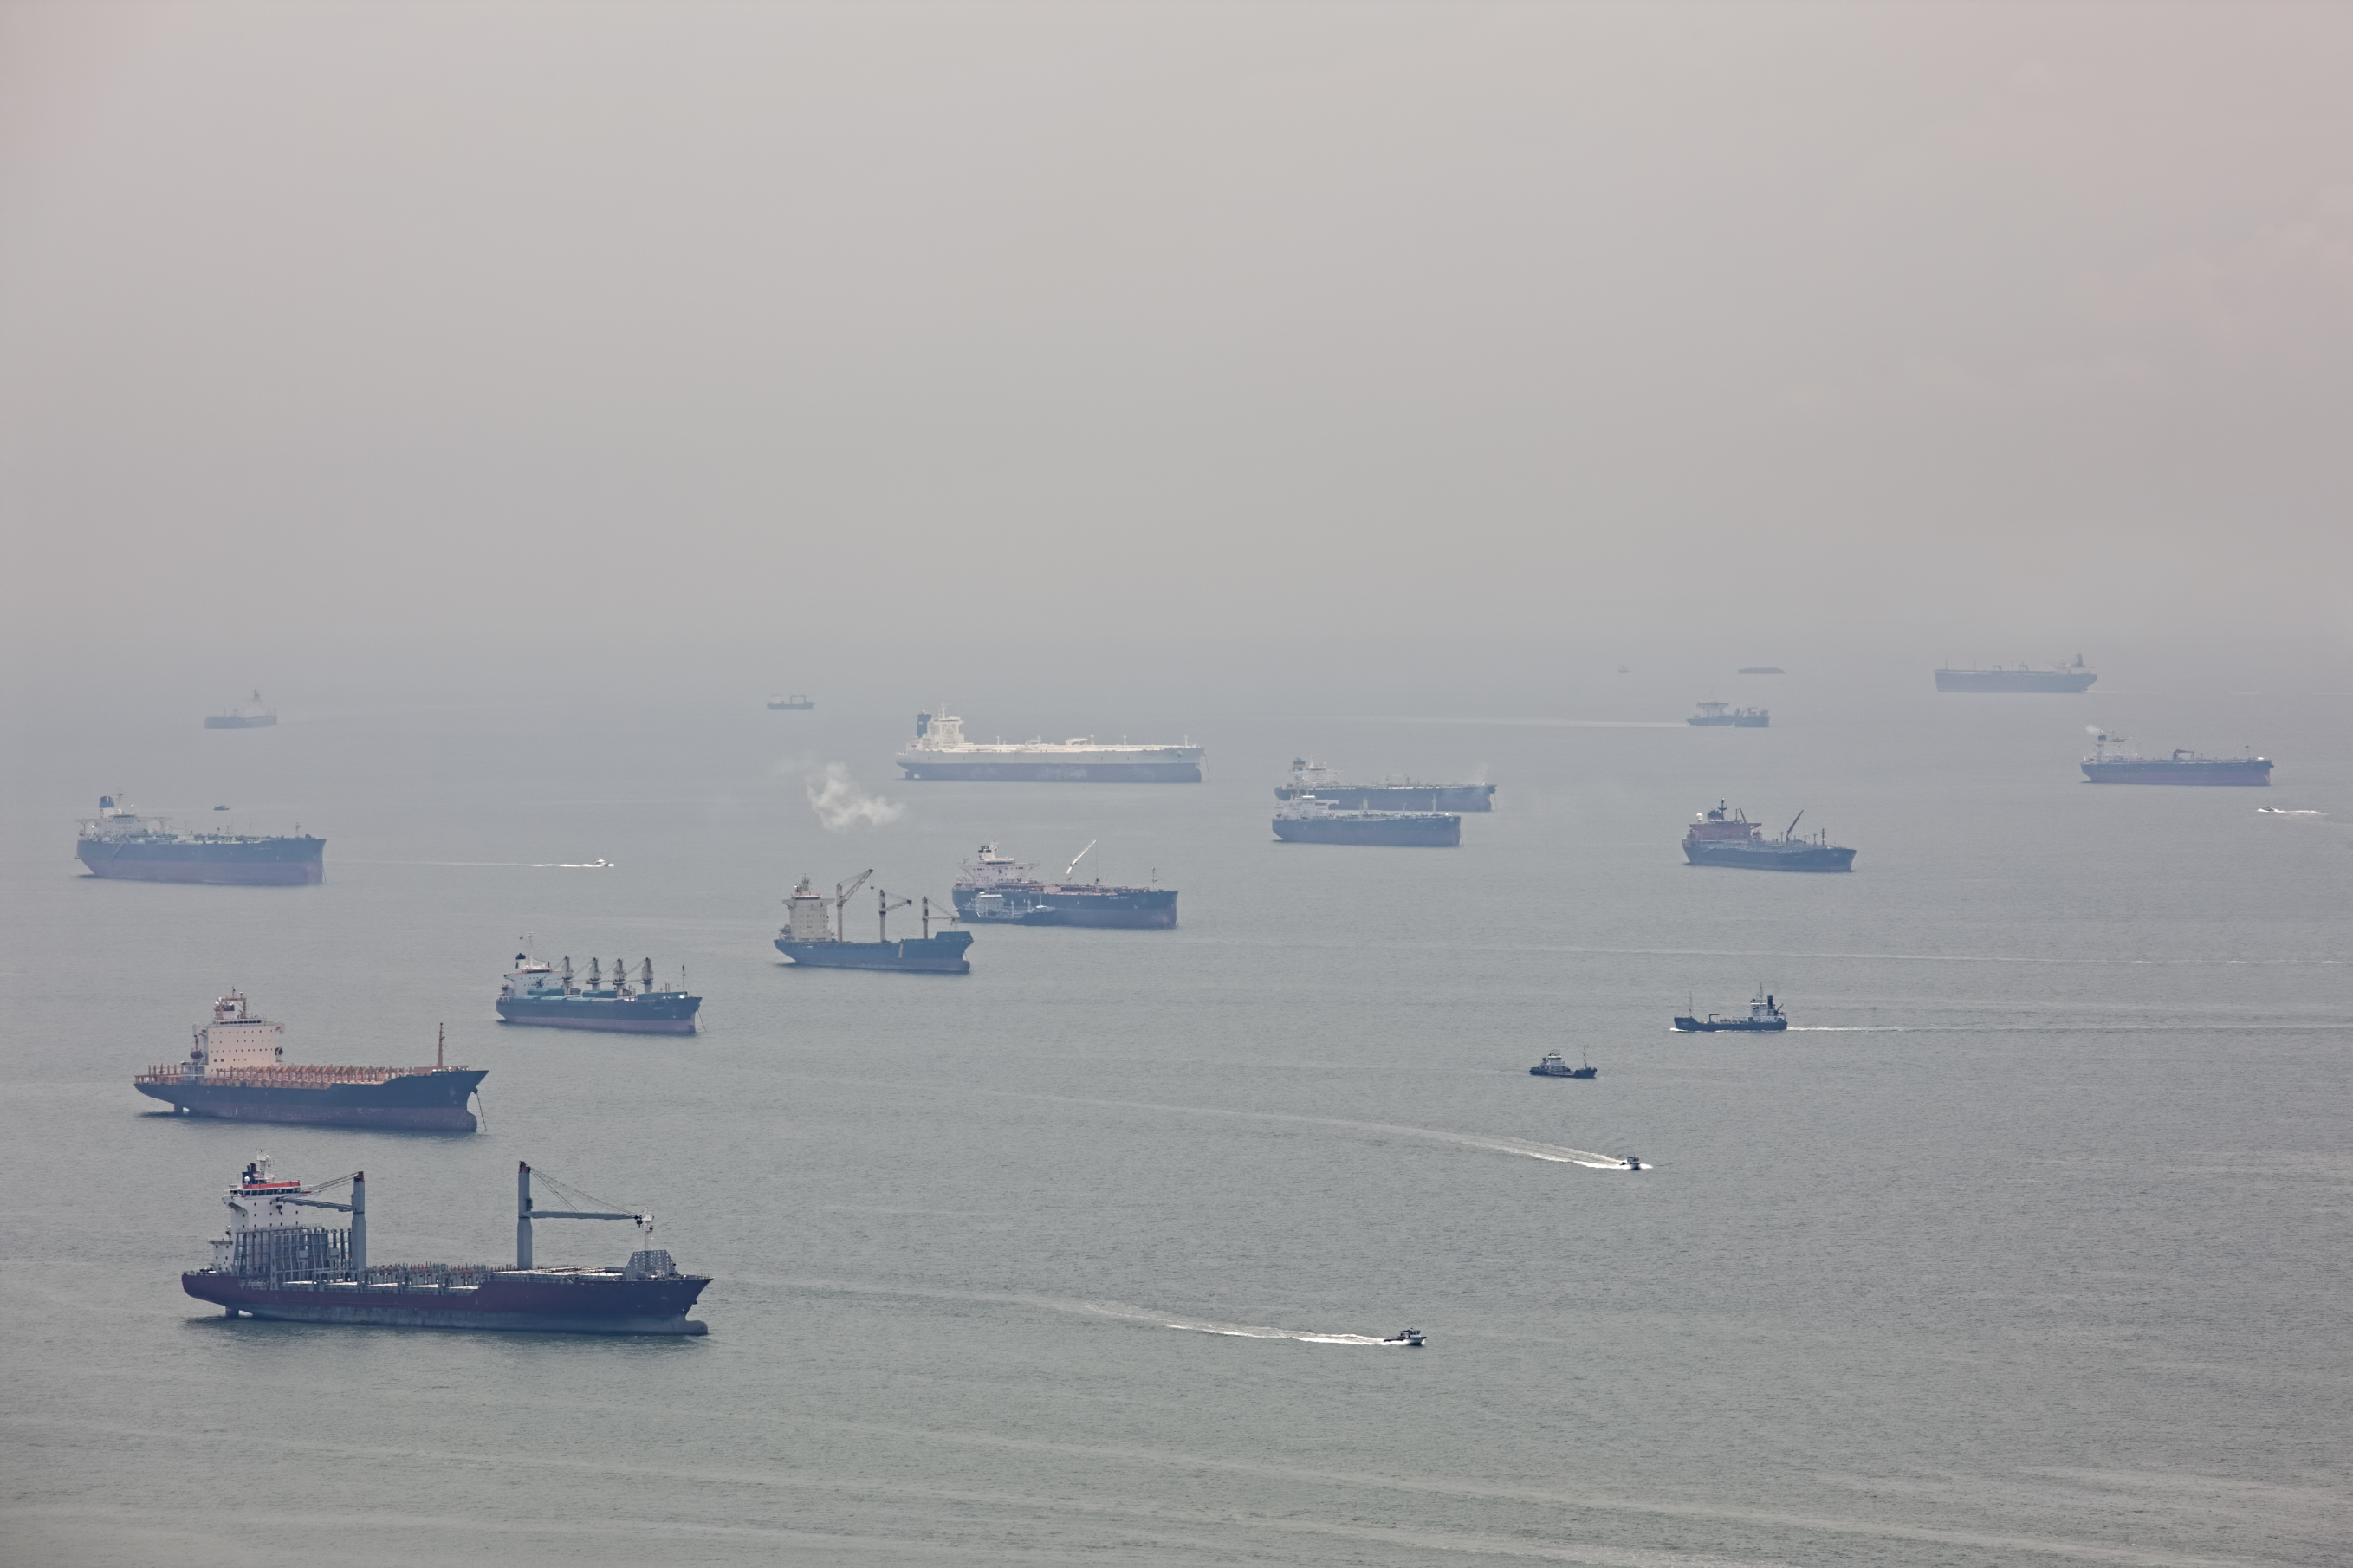 Maritime traffic and fleet monitoring